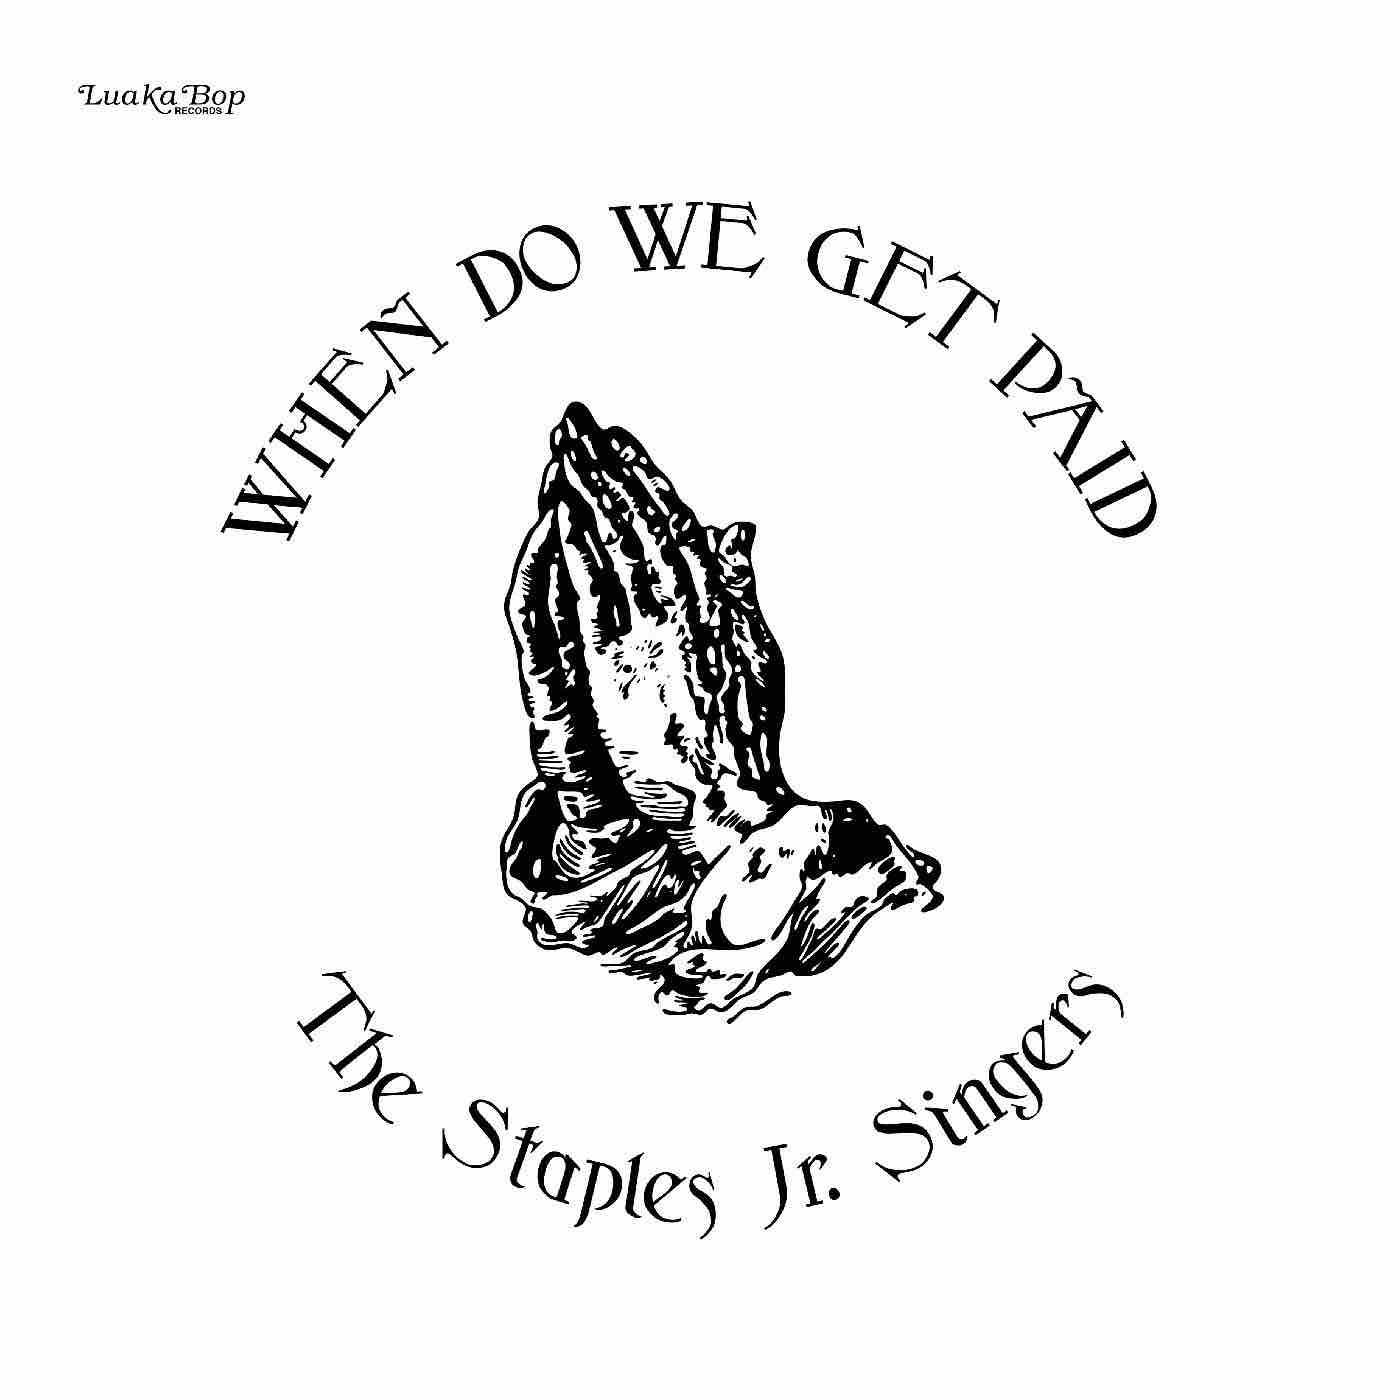 Staples Jr. Singers, The  - When Do We Get Paid LP